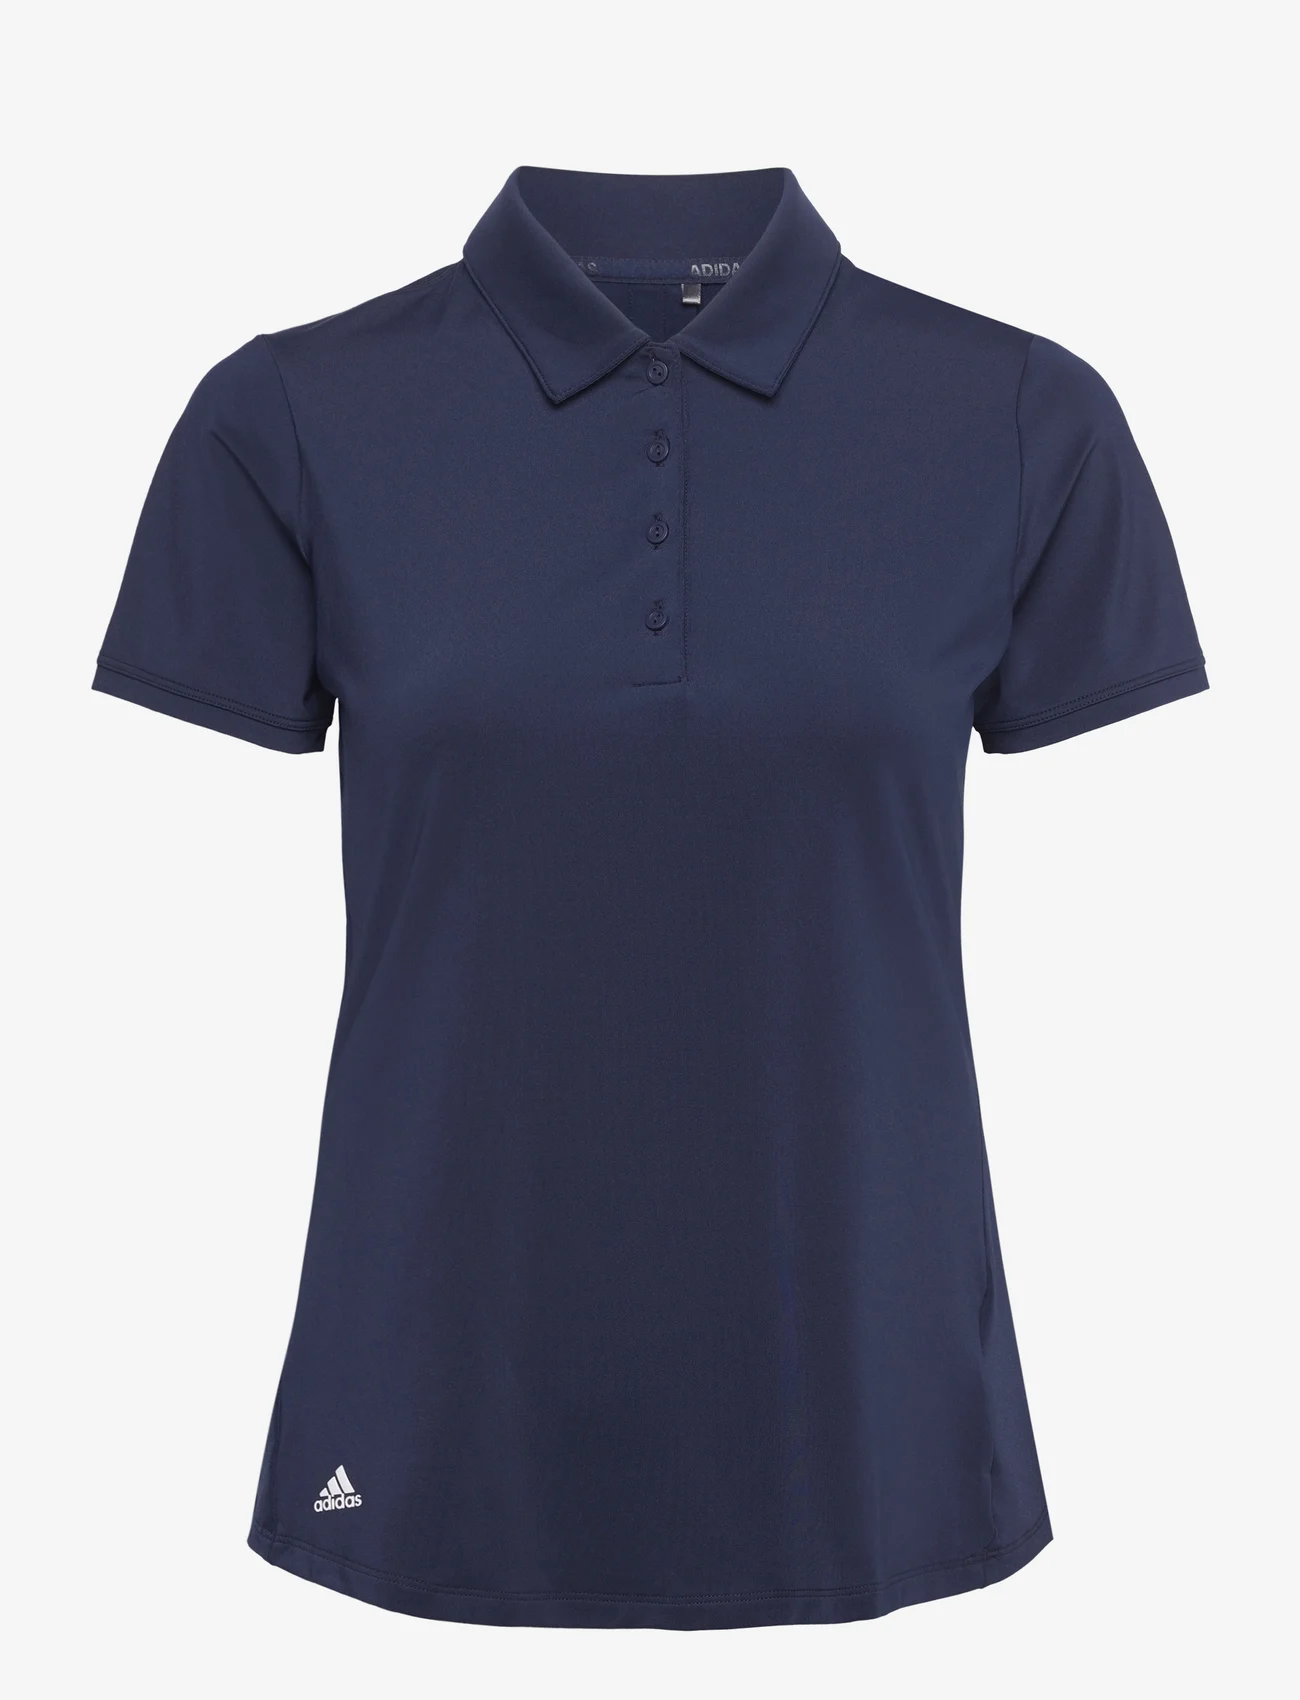 adidas Golf - ULT SLD SS P - tops & t-shirts - conavy - 1